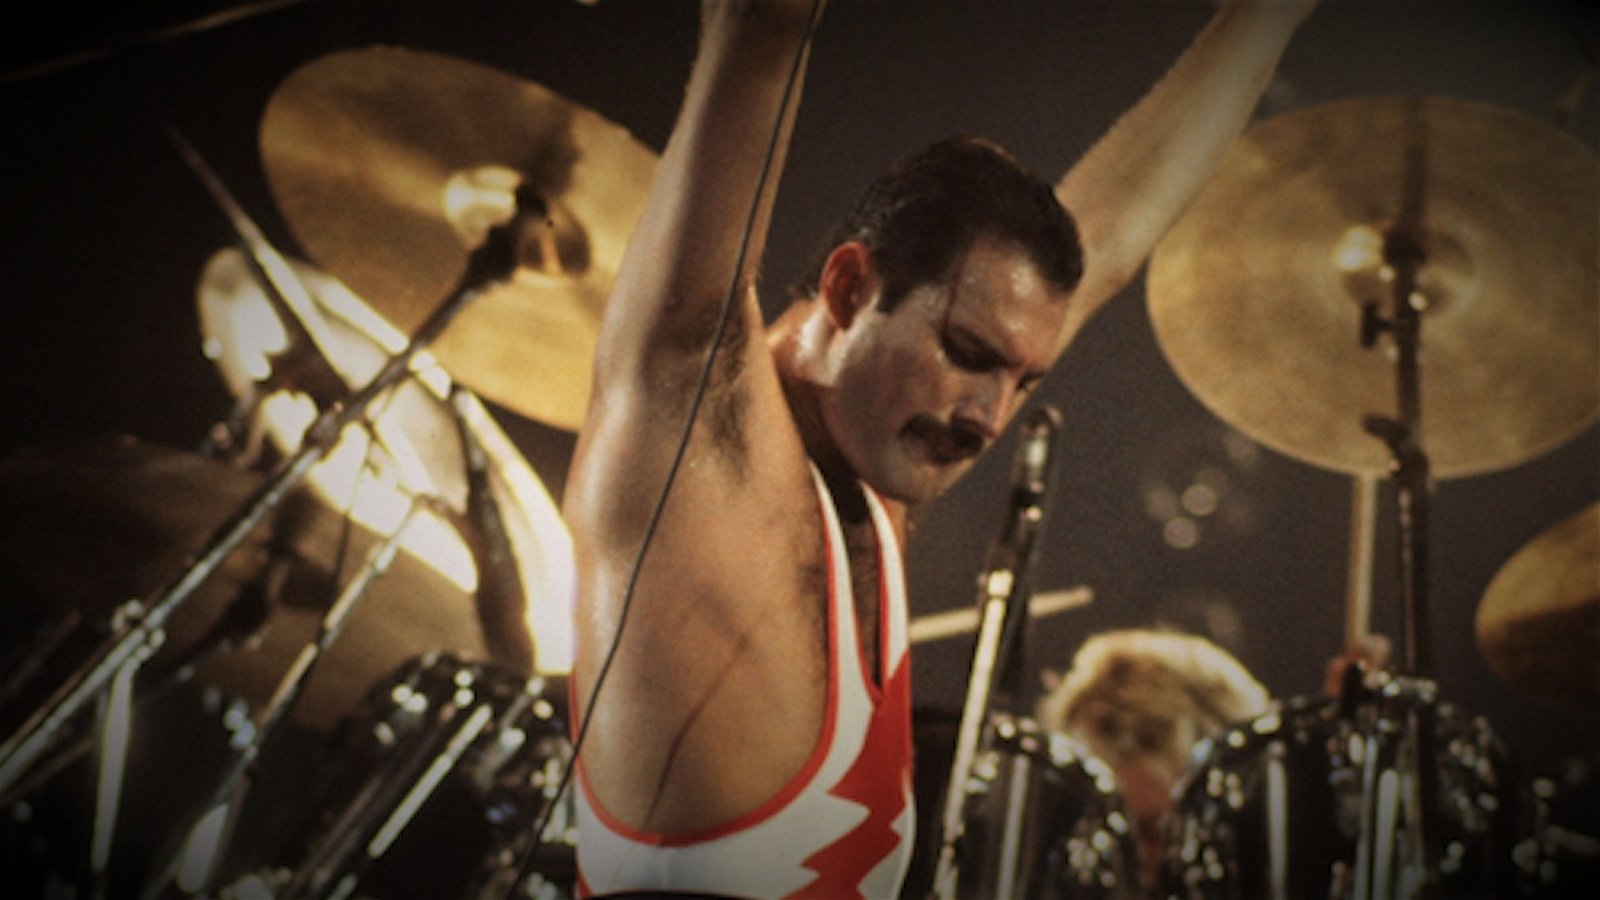 Streama Freddie Mercury: The King of Queen